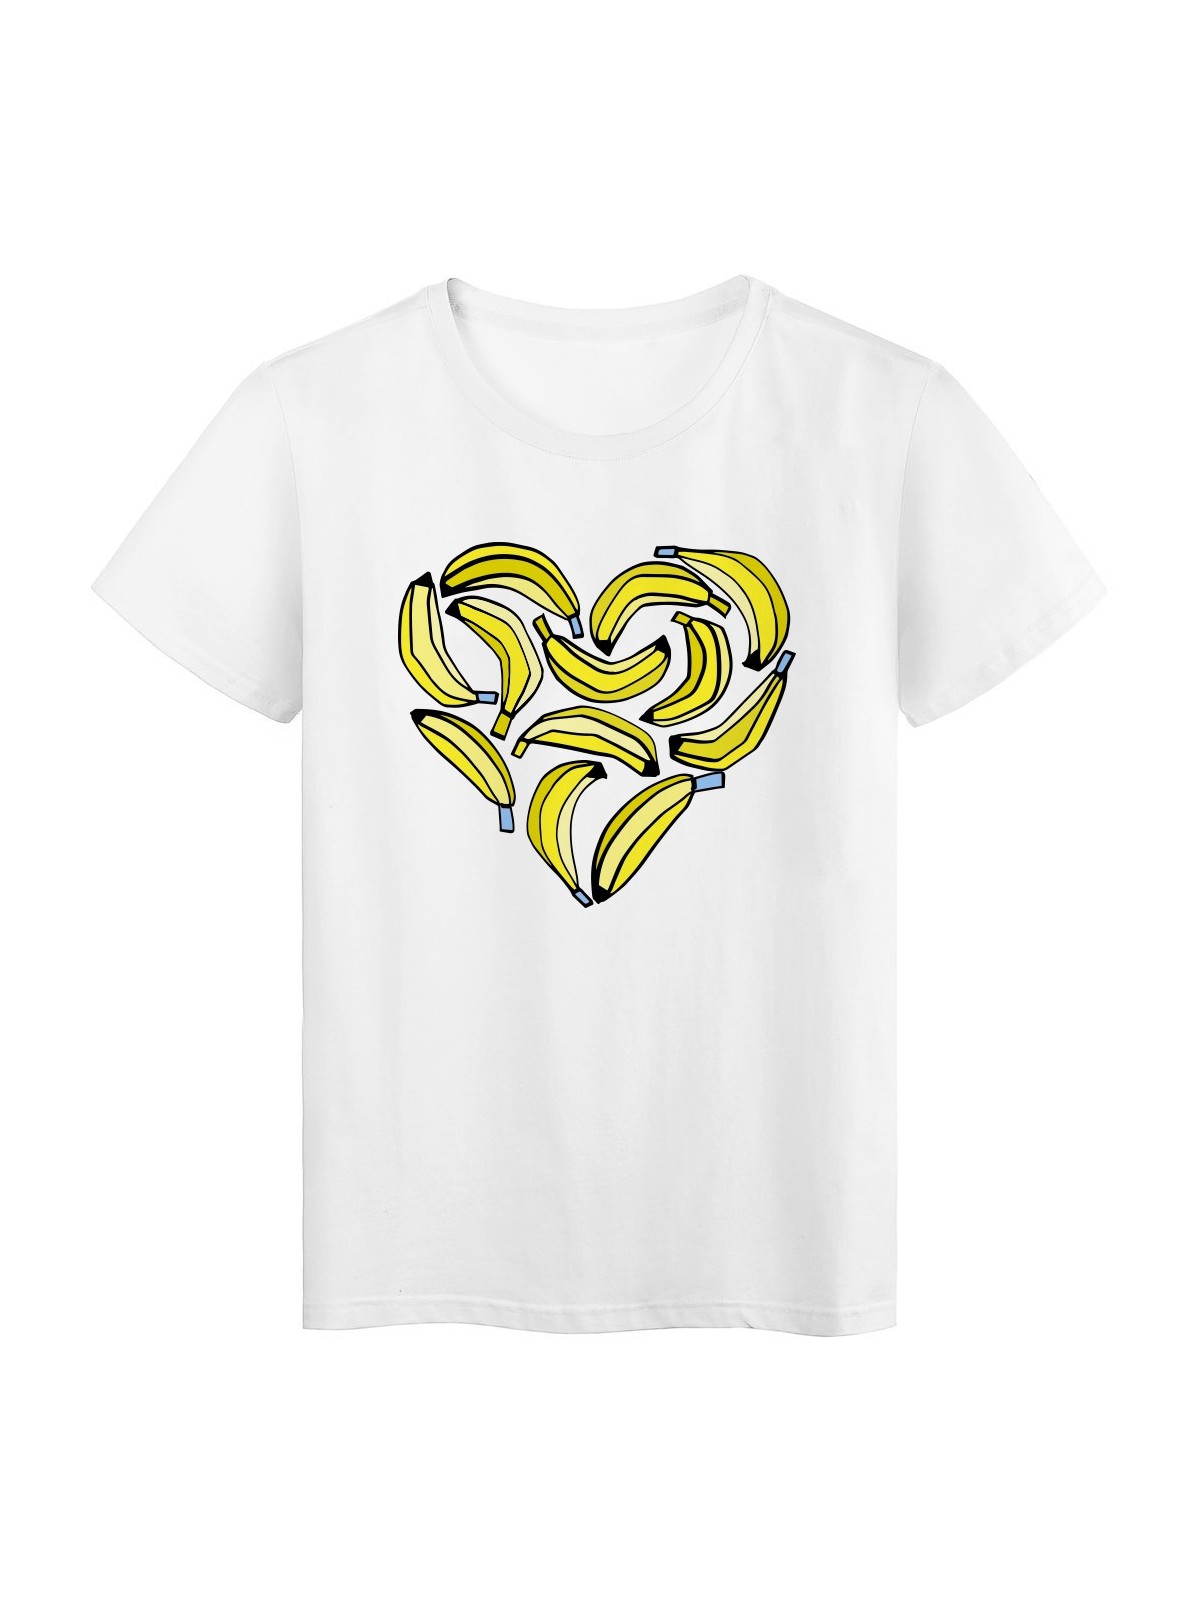 T-Shirt blanc Design cÅ“ur de bananes rÃ©f Tee shirt 2172